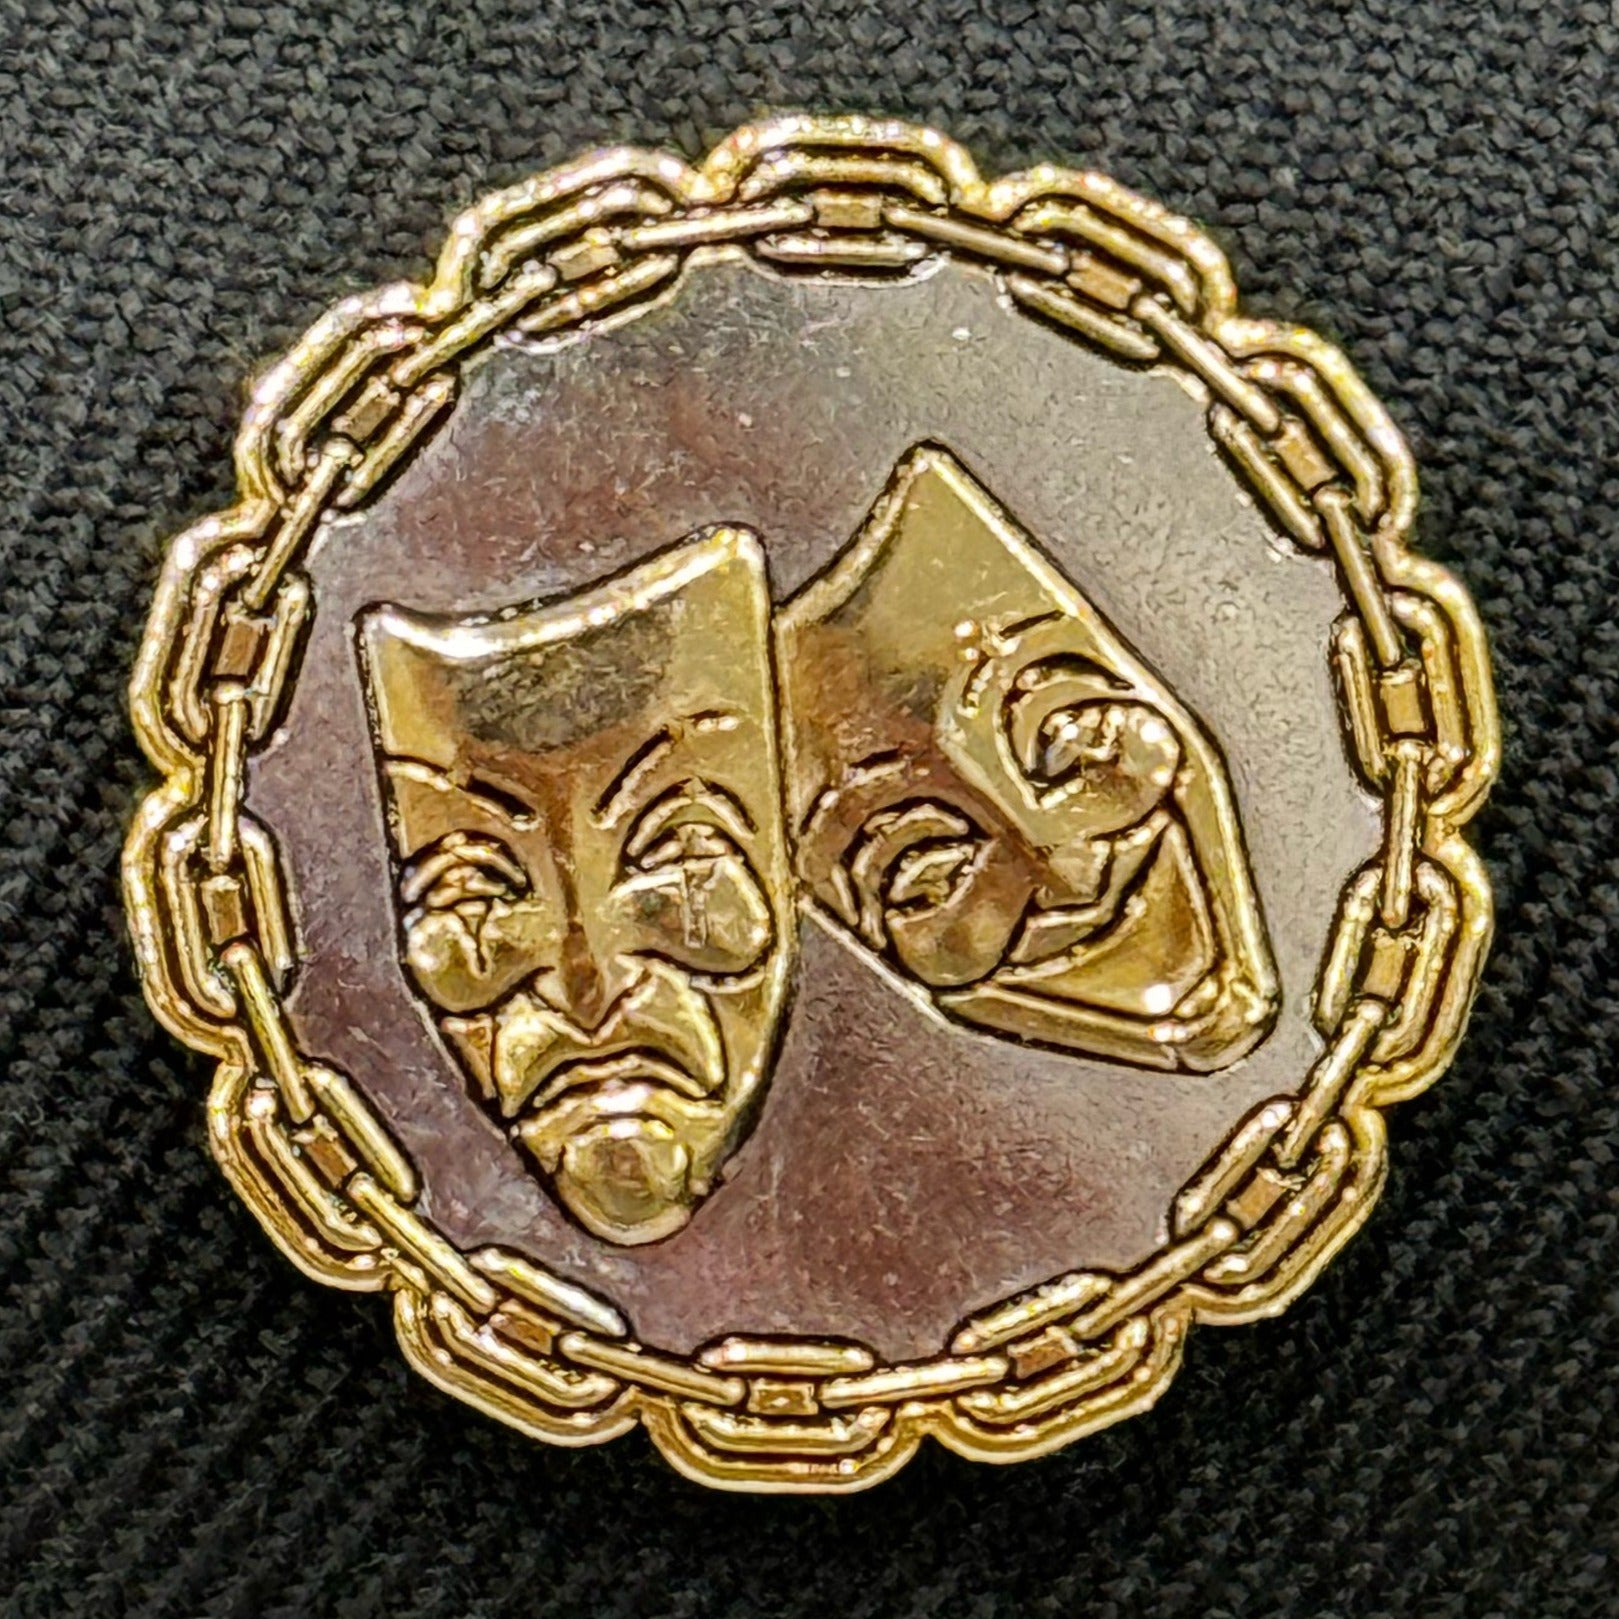 4U CUSTOM  FACES OF LIFE (GOLD) PIN